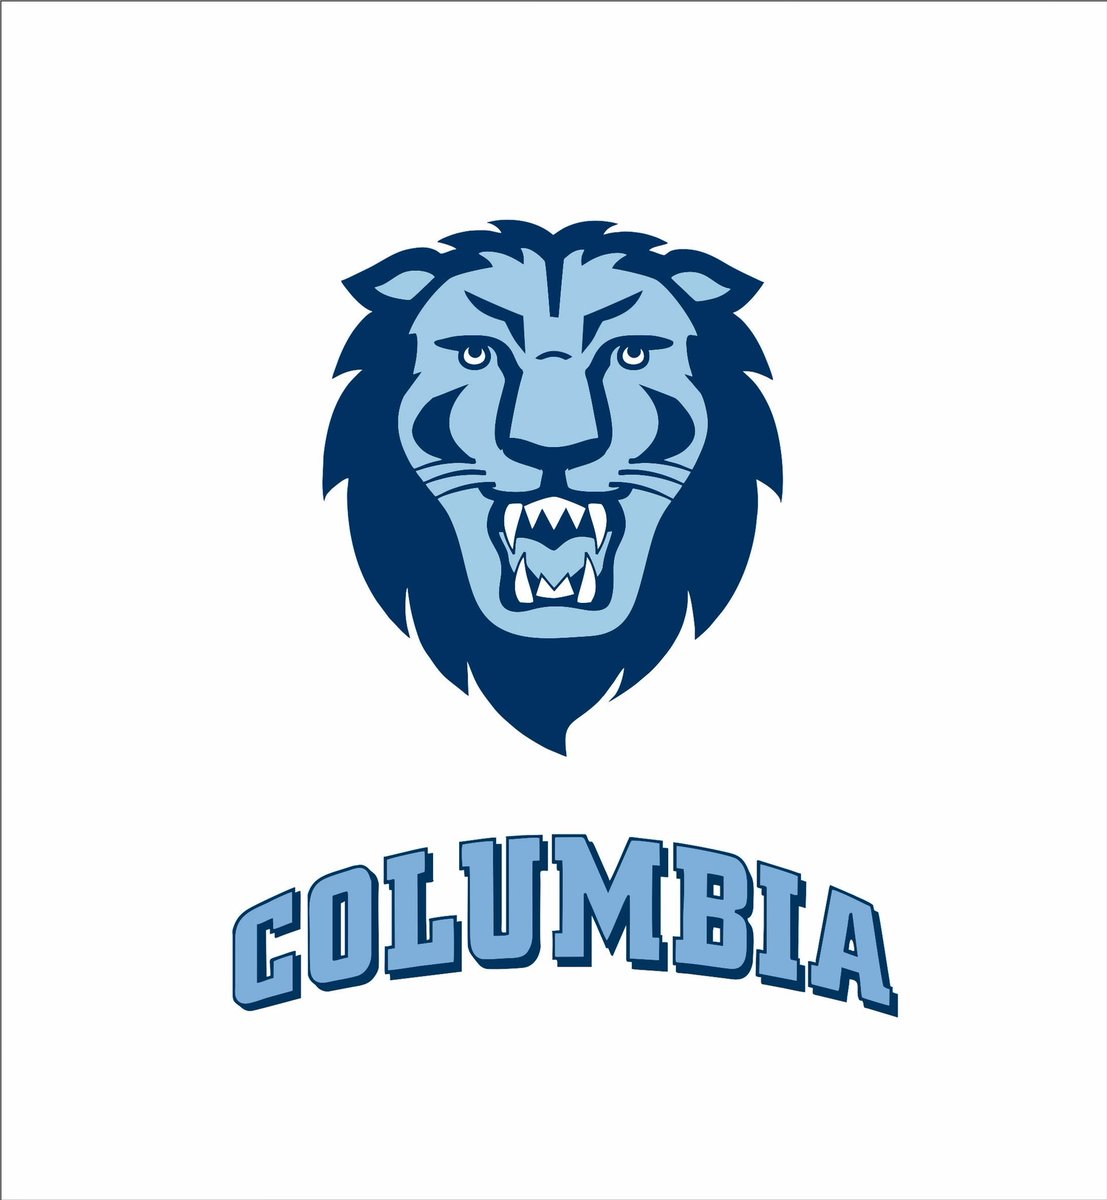 I will be at Columbia University today!! 
#CUinNYC

@Coach_Kukesh @CoachJonMc @CourtneyWeiner2 @Coach_Fab @CULionsFB @LuHiFootball